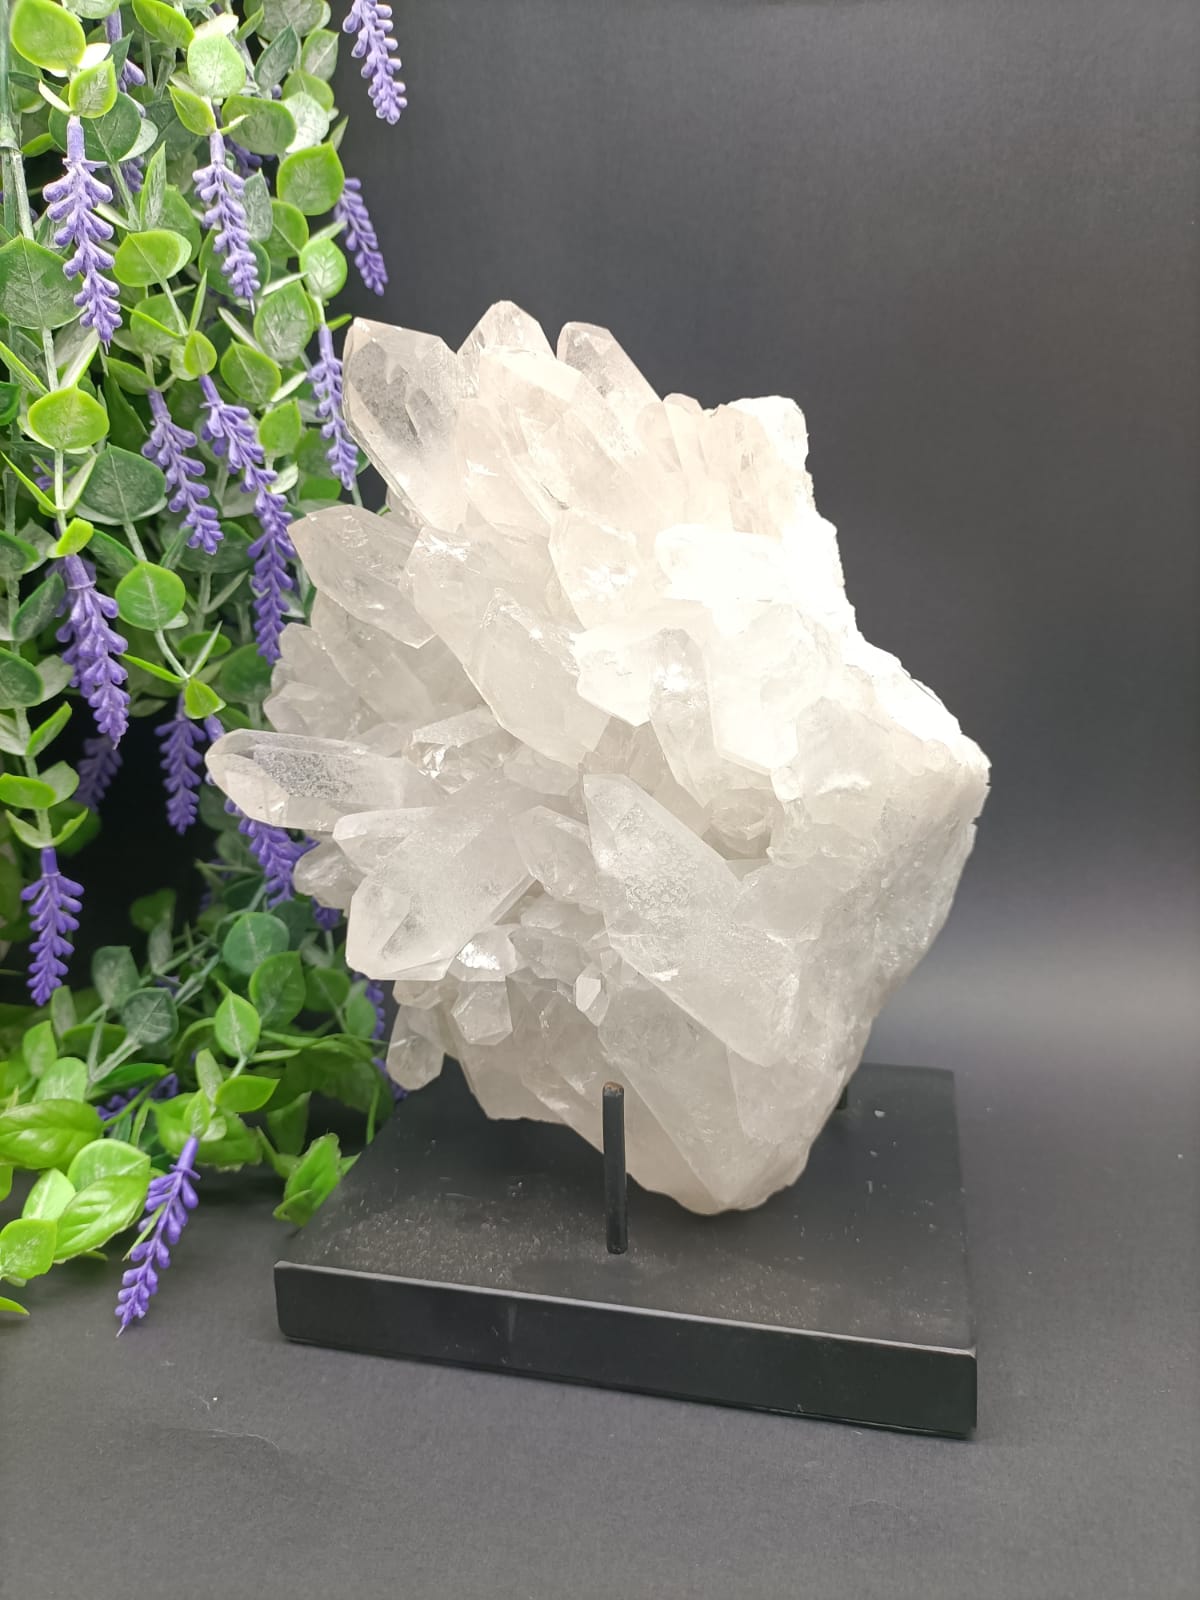 Clear Quartz Cluster High Grade 3.5 Kg Crystal Wellness